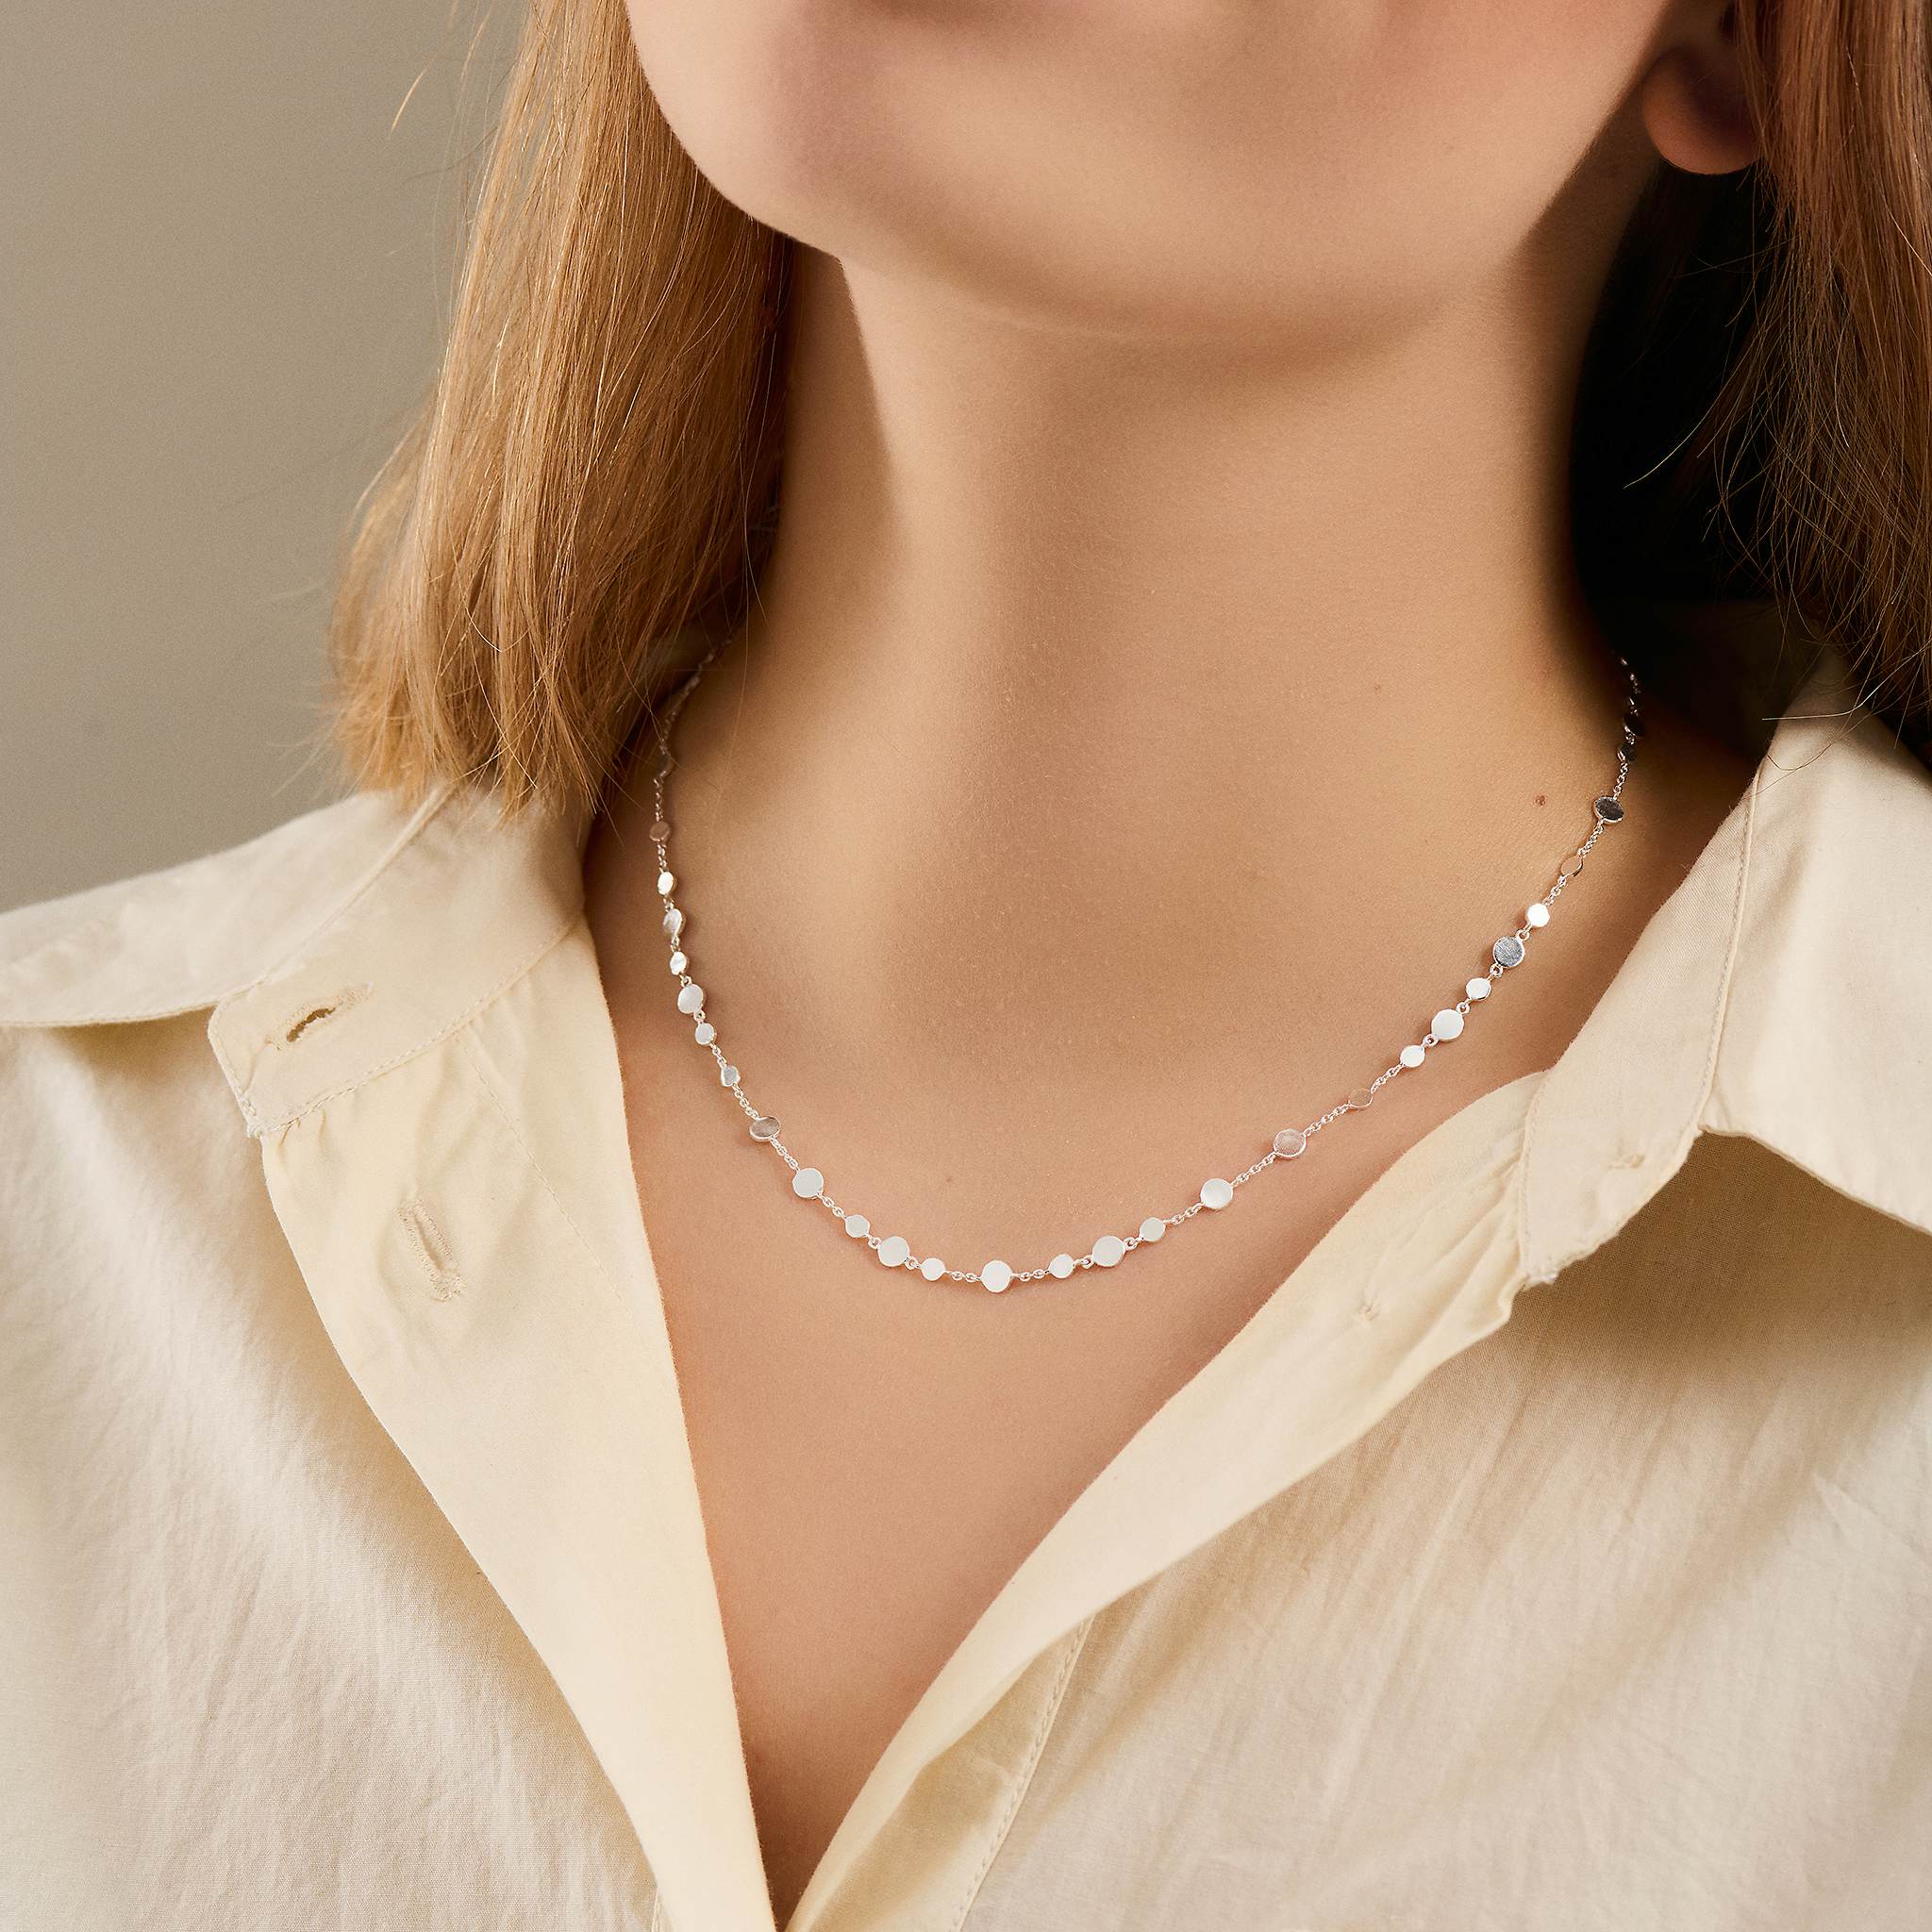 Essence Necklace von Pernille Corydon in Vergoldet-Silber Sterling 925